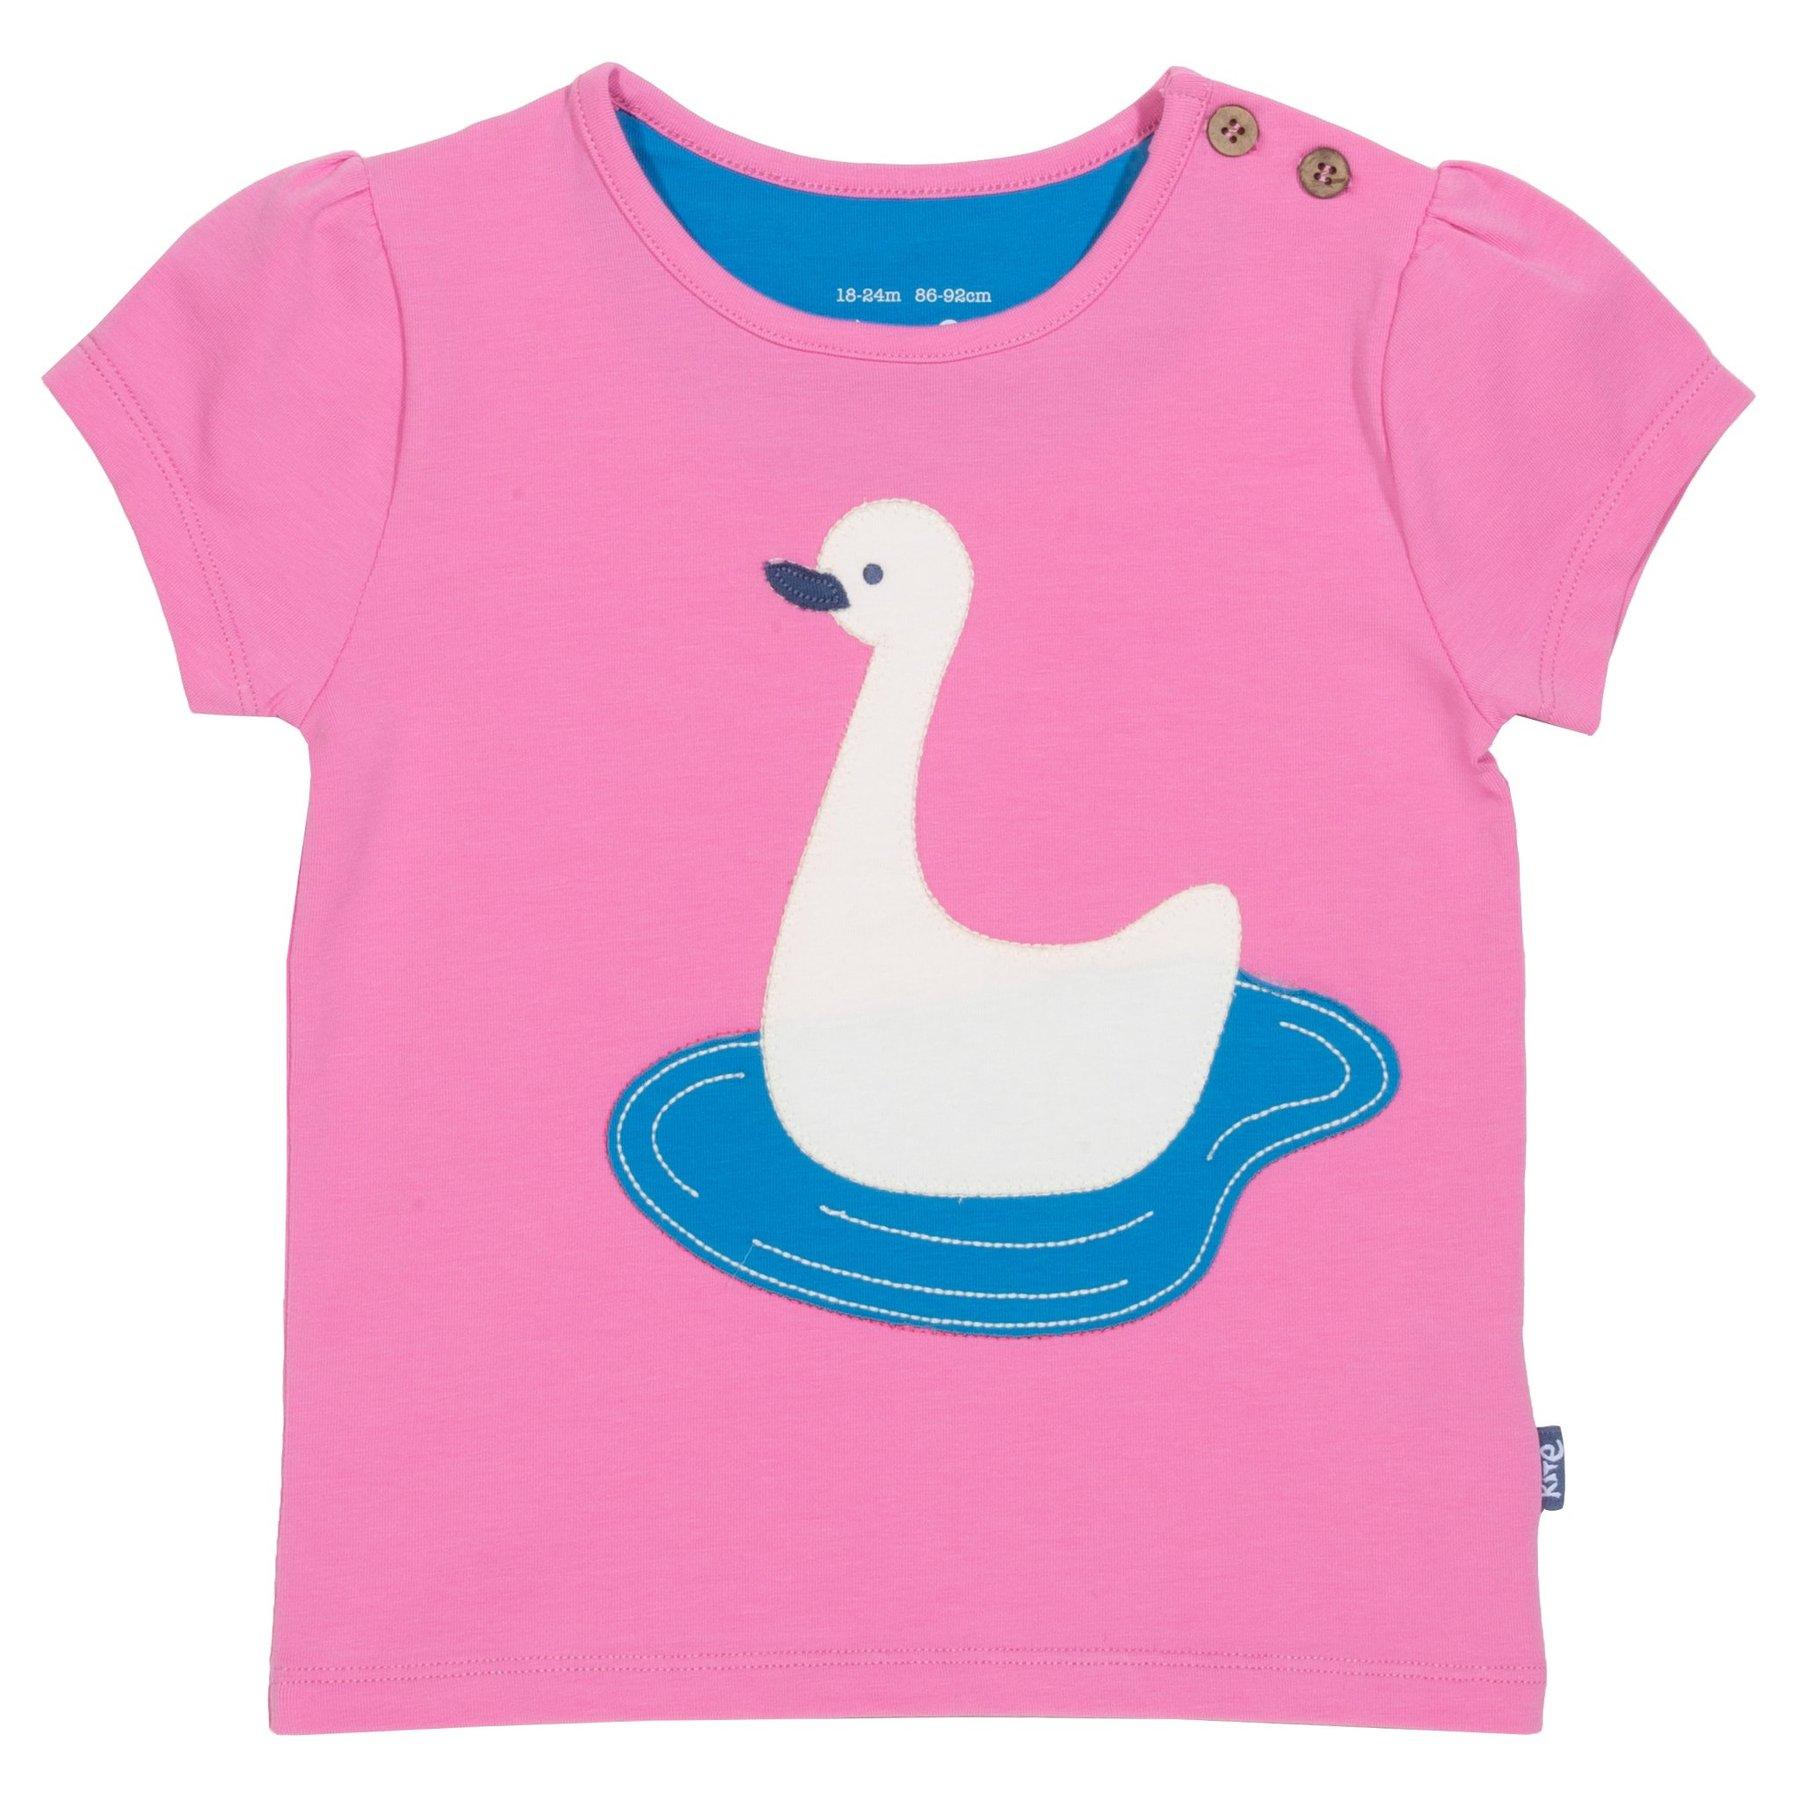 Kite Clothing Swan T-Shirt front